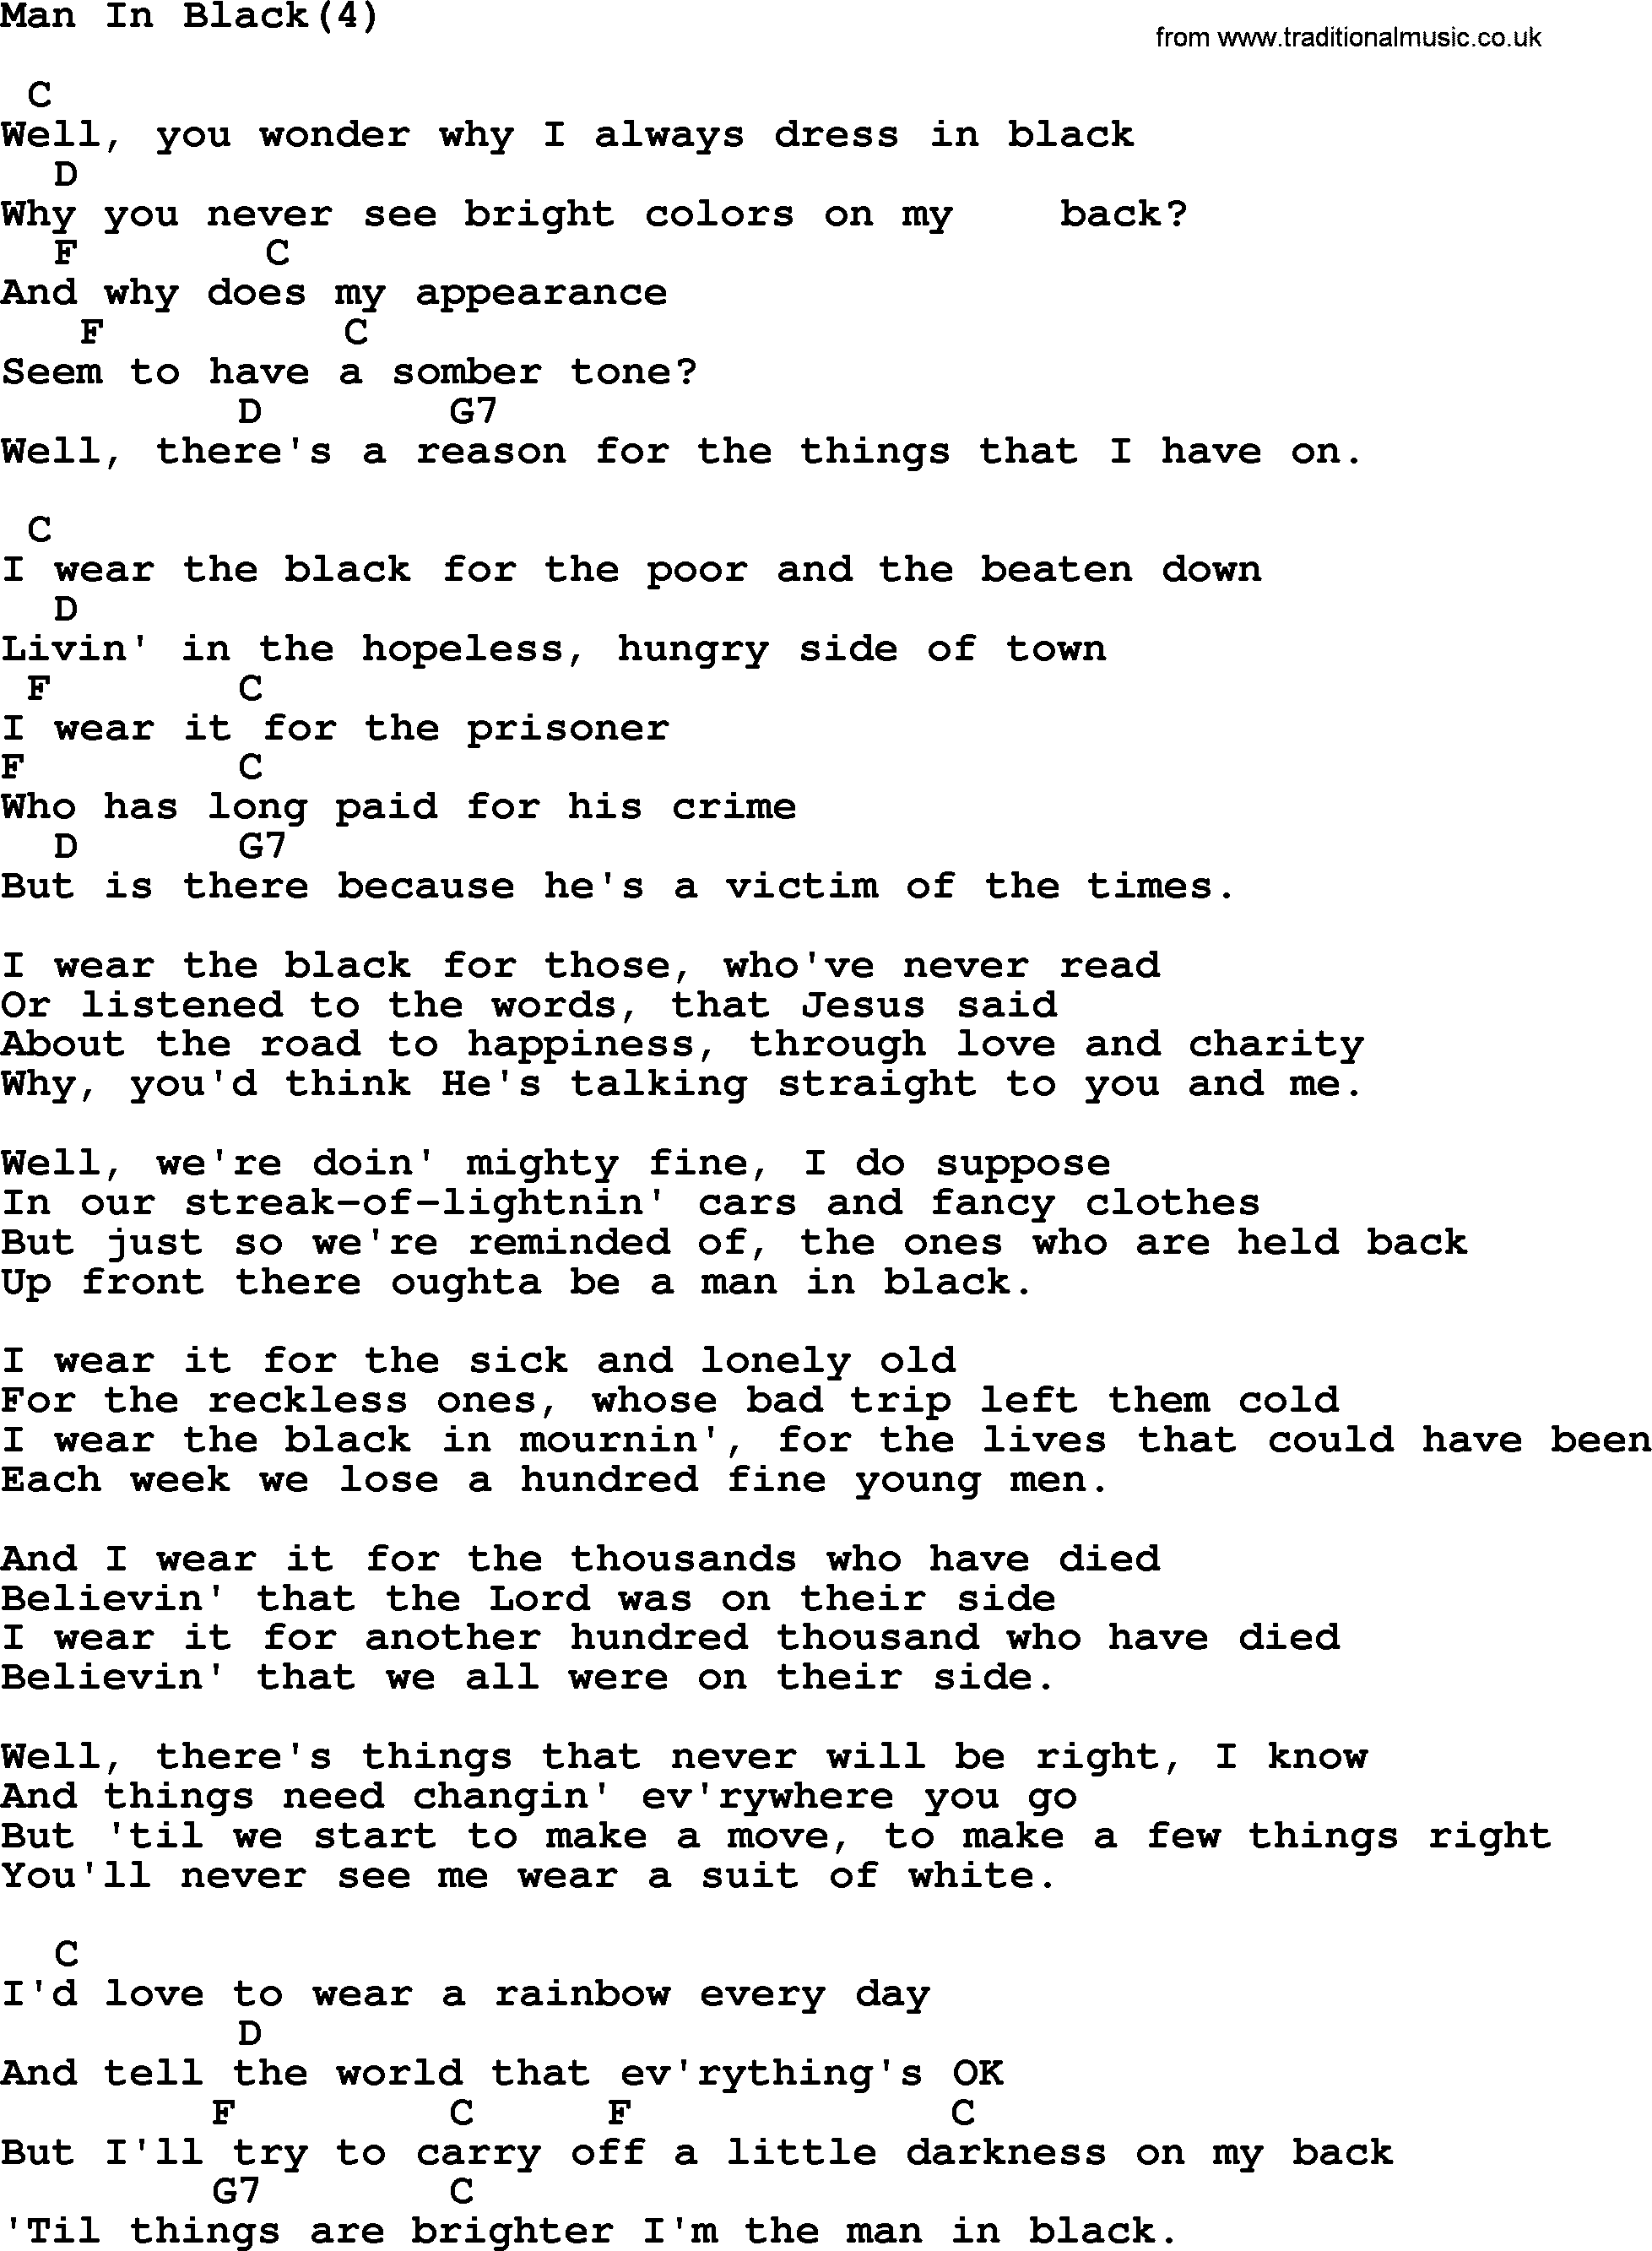 Johnny Cash song Man In Black(4), lyrics and chords